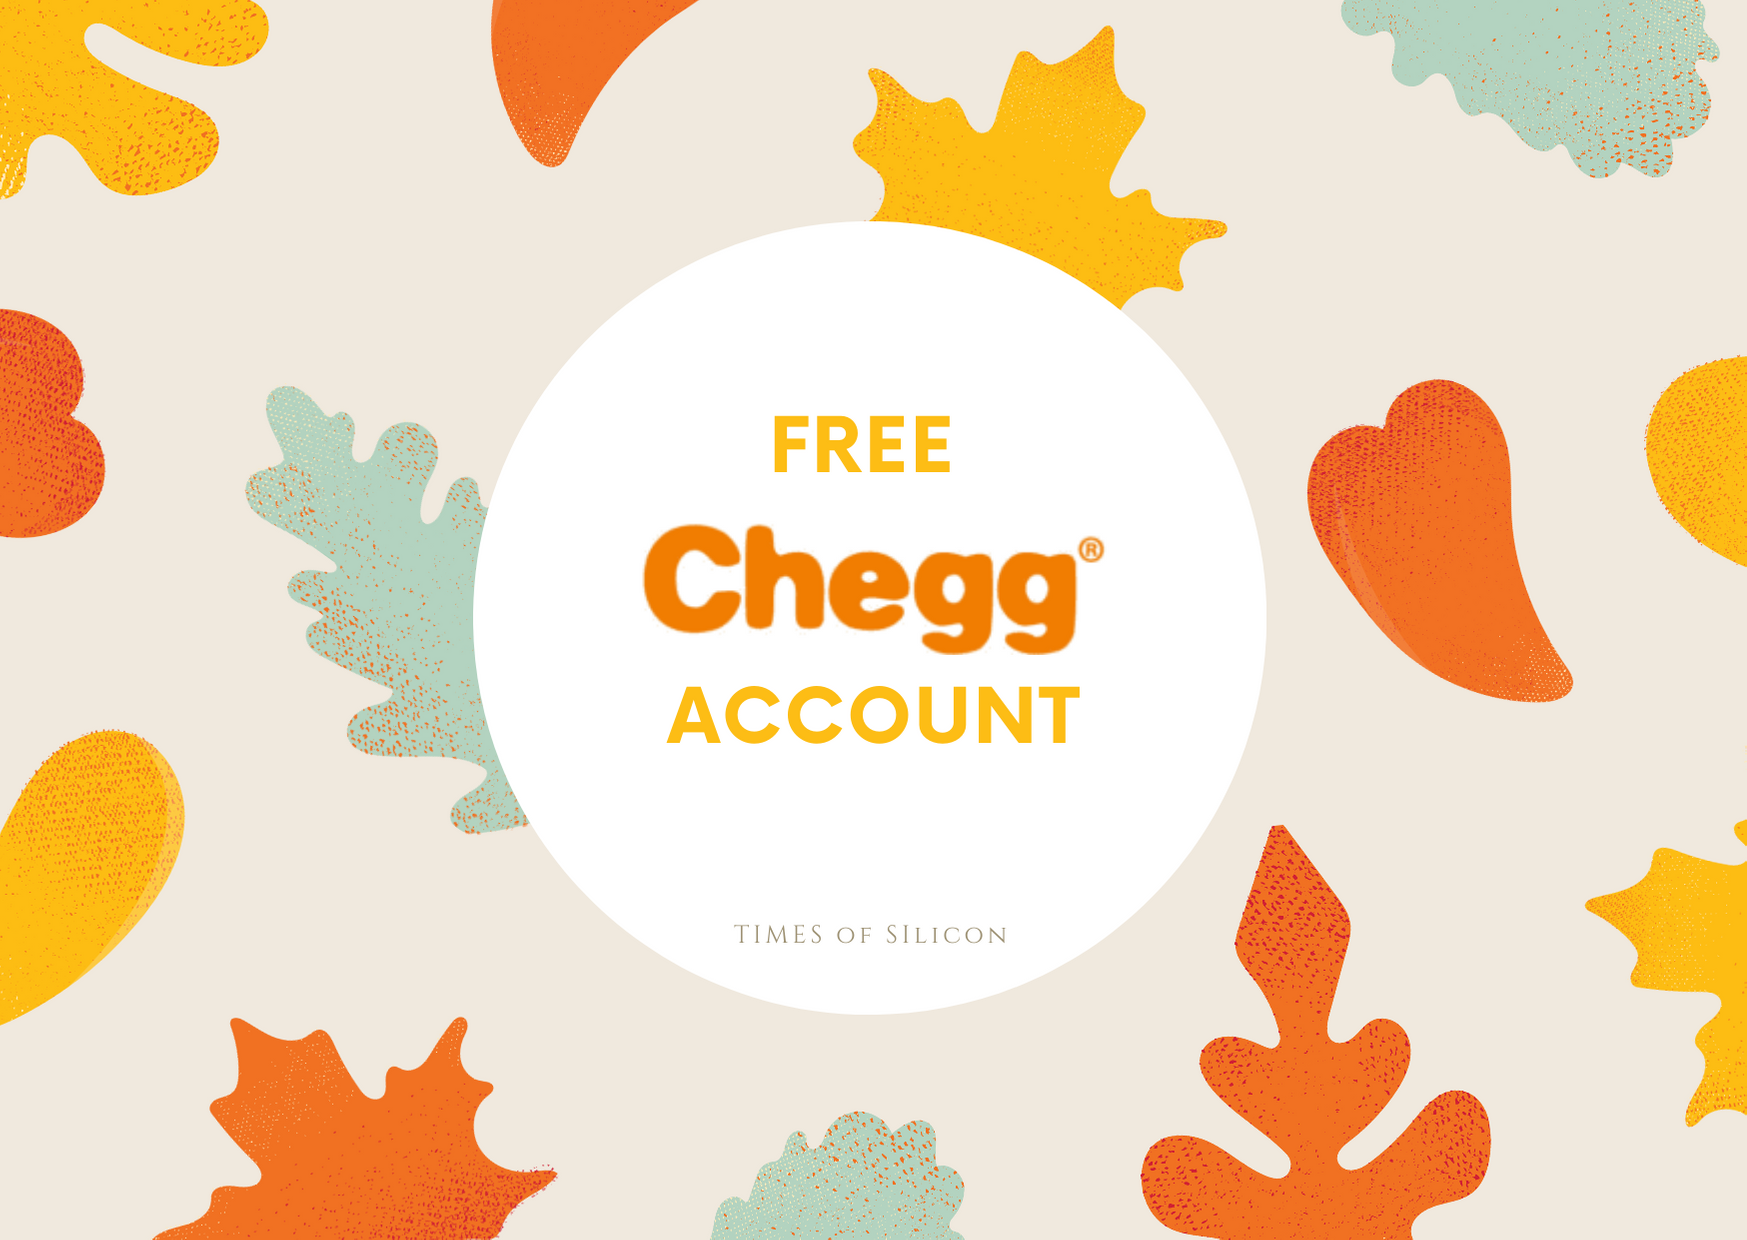 Free chegg account